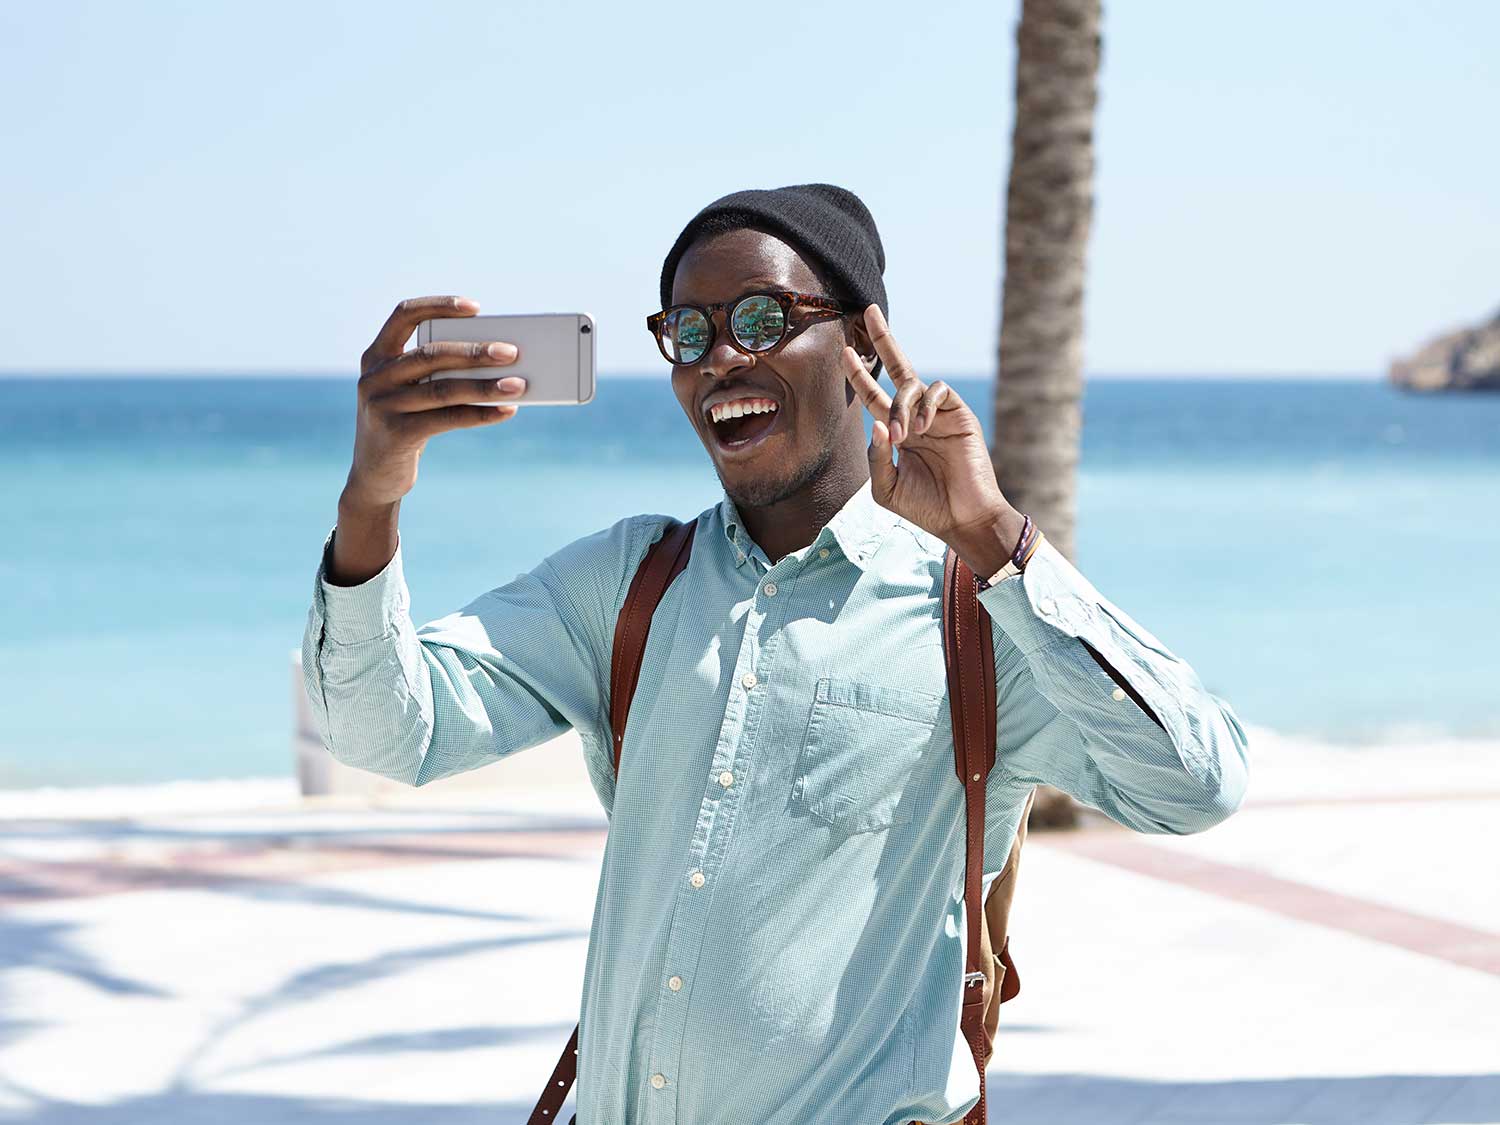 Man talking selfie on beach.